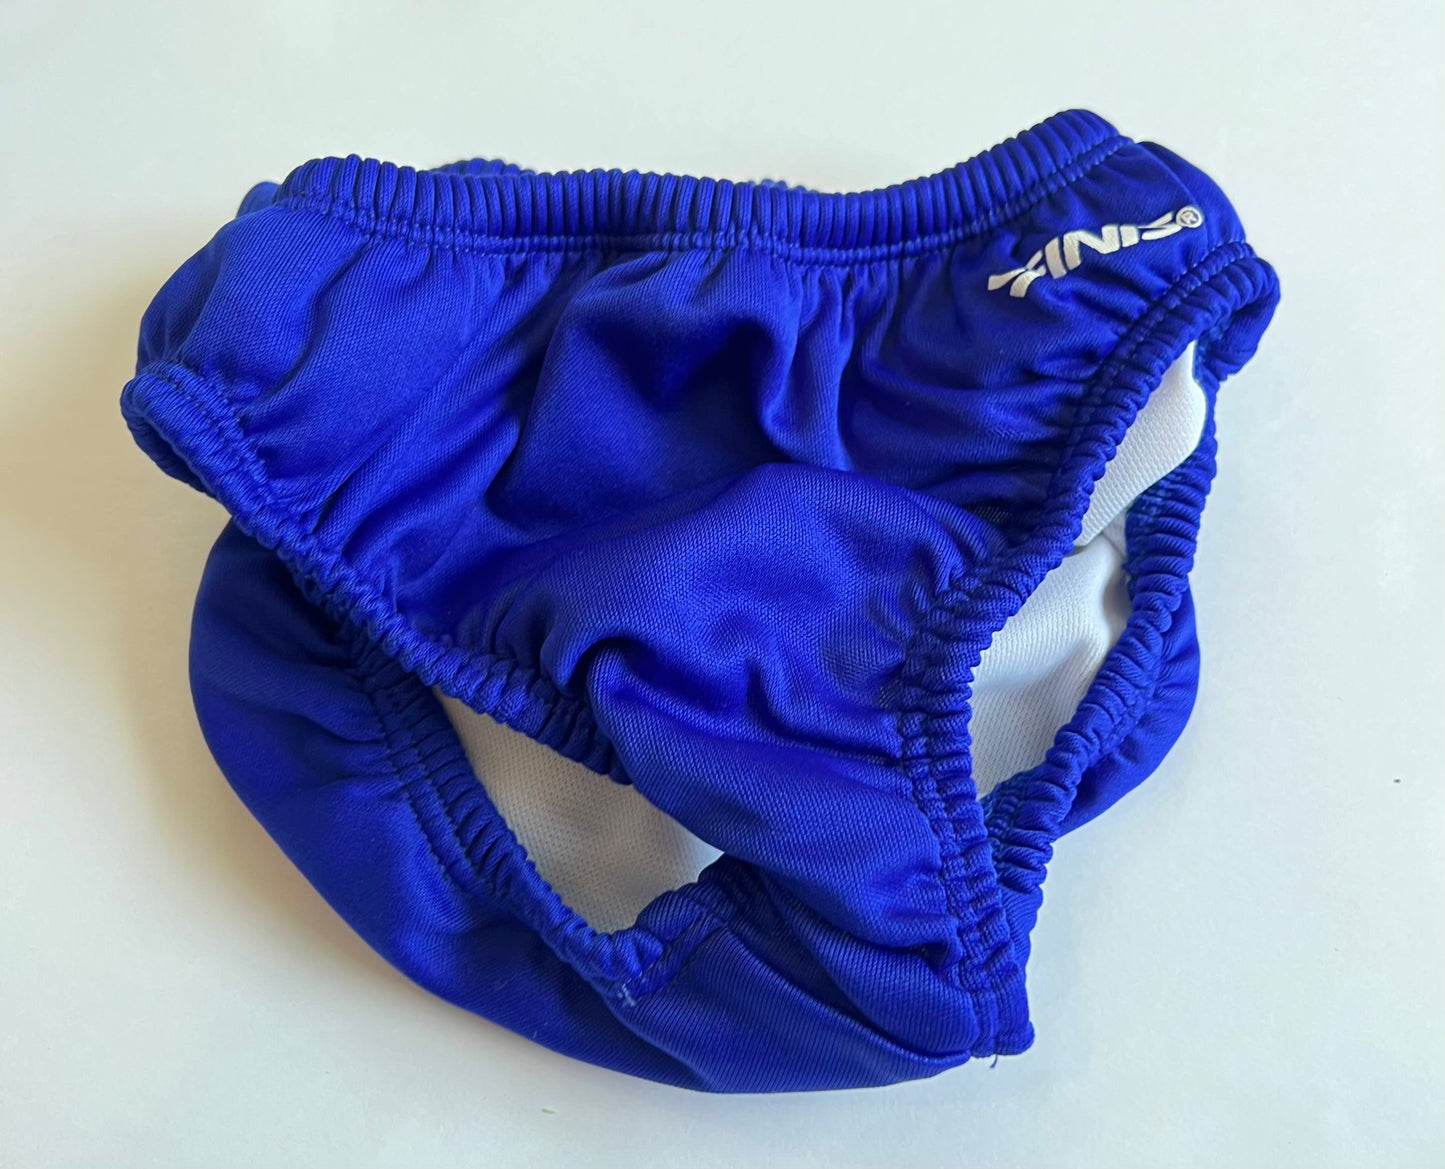 4T Finis Swim Diaper Blue Reusable Diaper / Pull Up - Excellent Condition (EC)